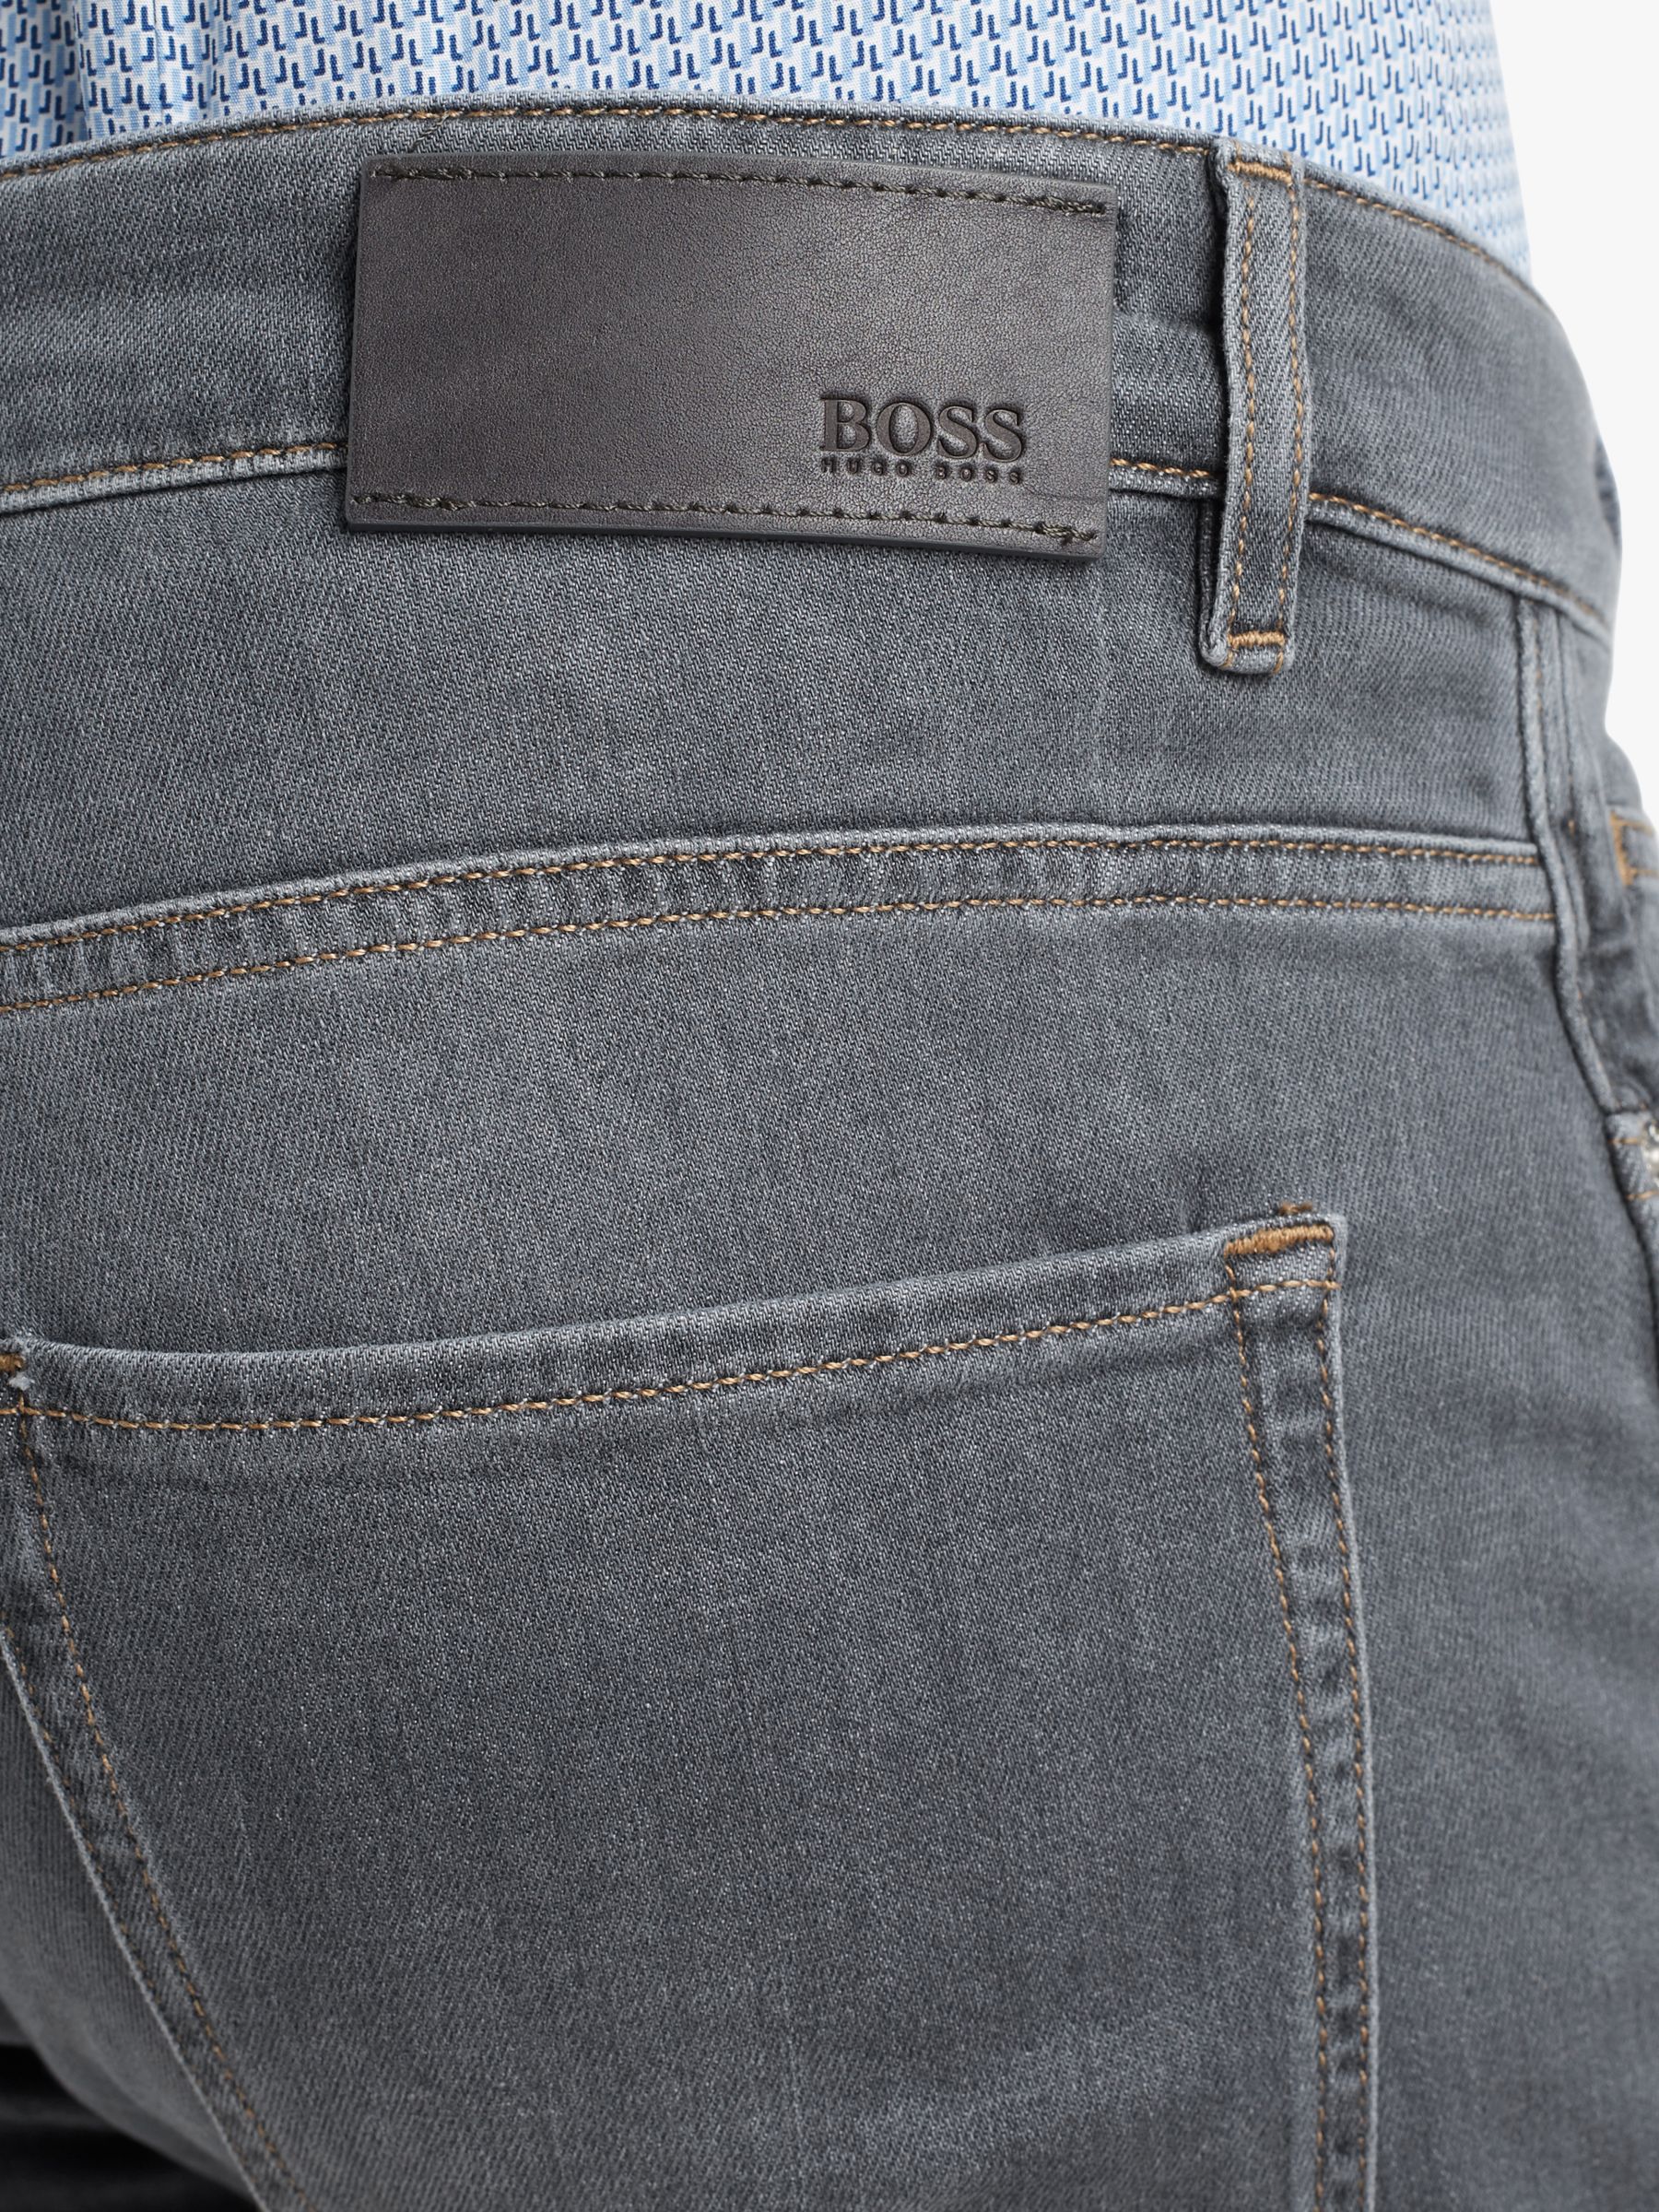 hugo boss grey jeans